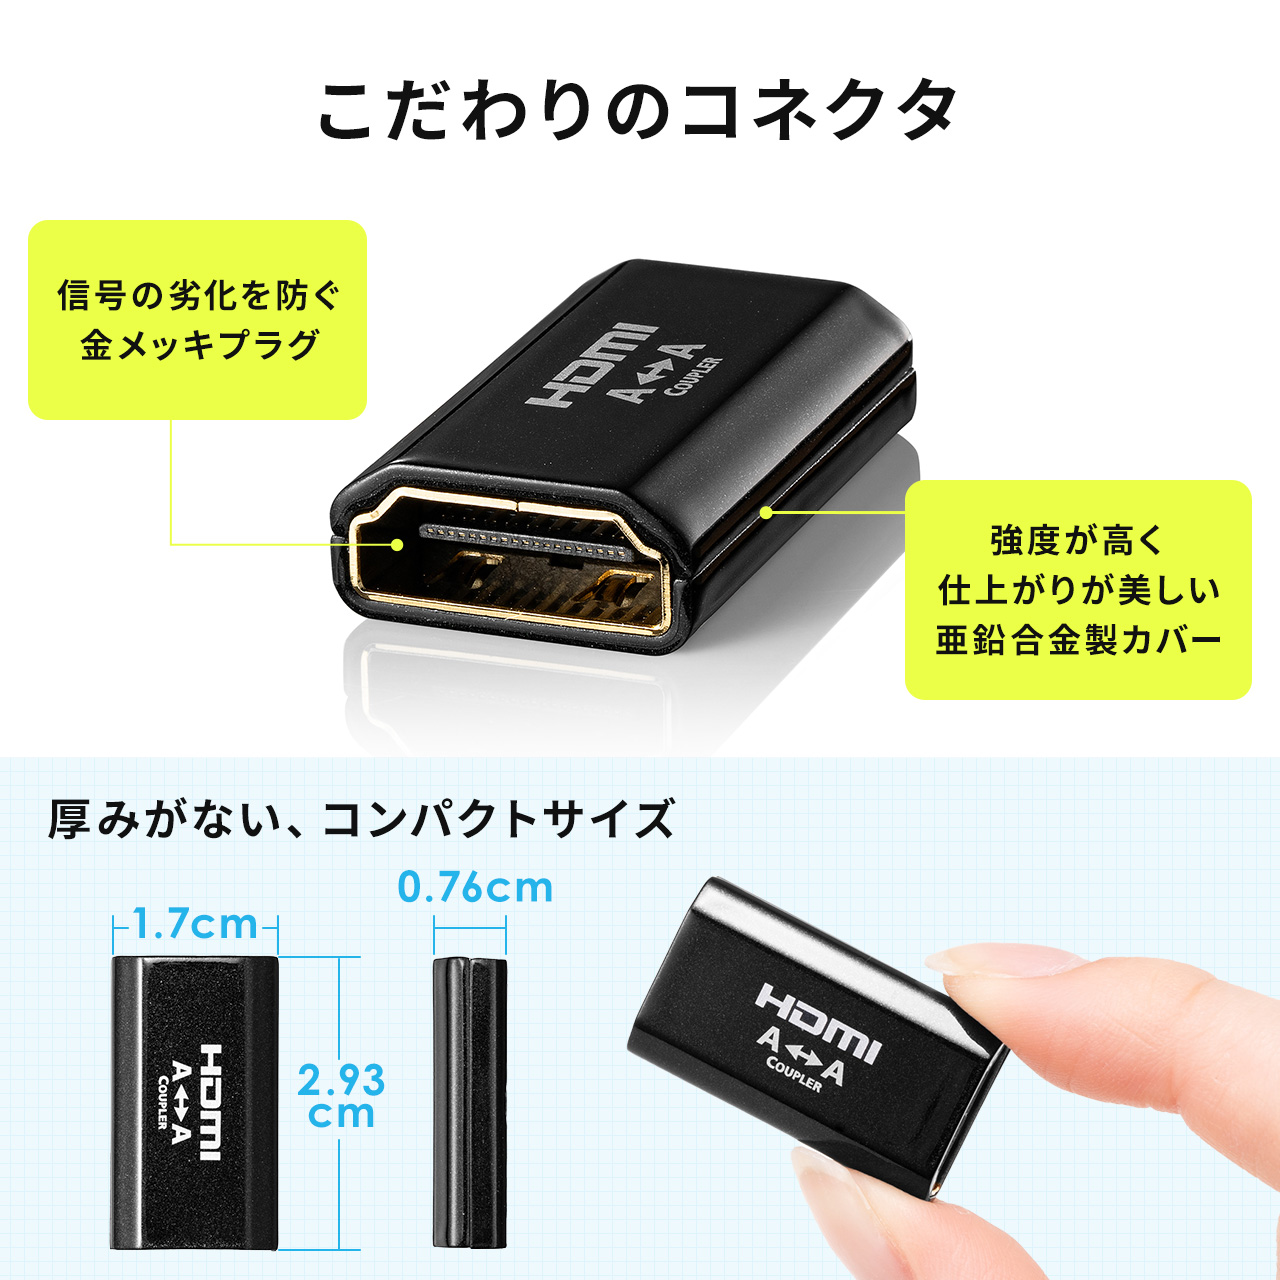 HDMI延長アダプタ HDMI中継アダプタ メス‐メス 延長コネクター 4K/60Hz対応 18Gbps 3D HDR ARC対応 最長5m延長 500-HD029